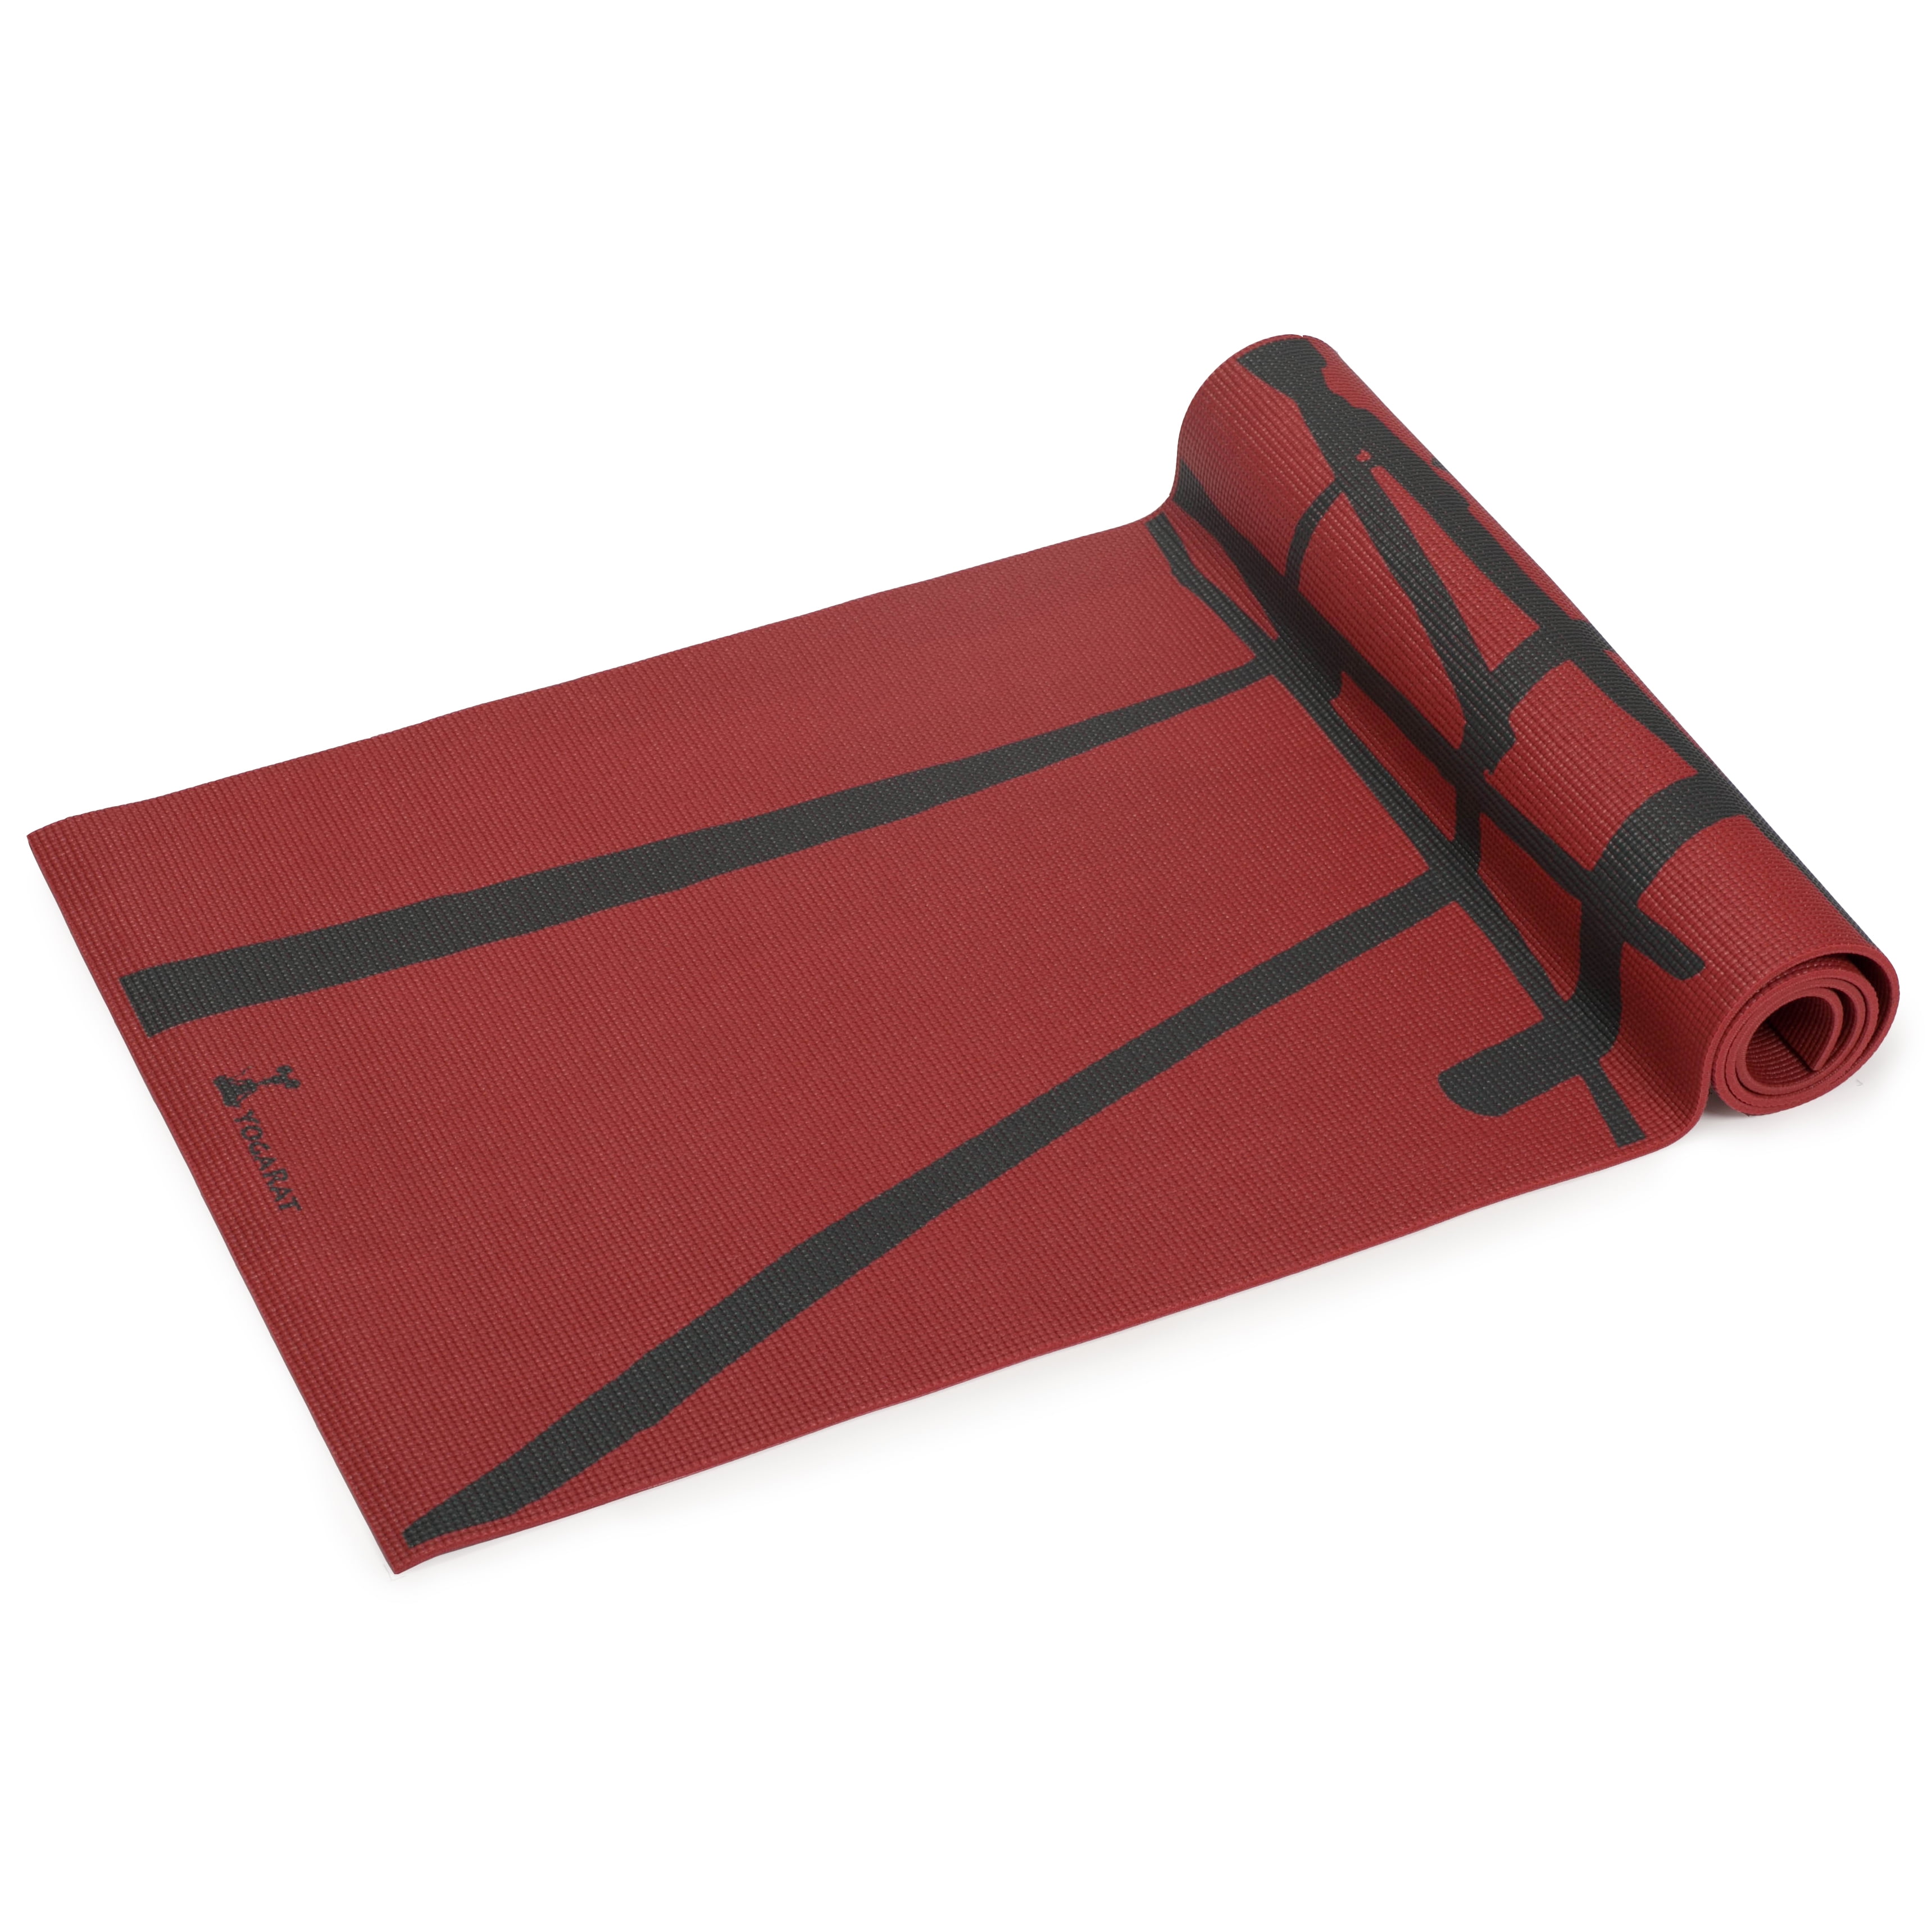 RatMat Printed Yoga Mat: Eco-friendly, nontoxic foam construction.  Extra-thick and durable. 24 x 68 x ¼